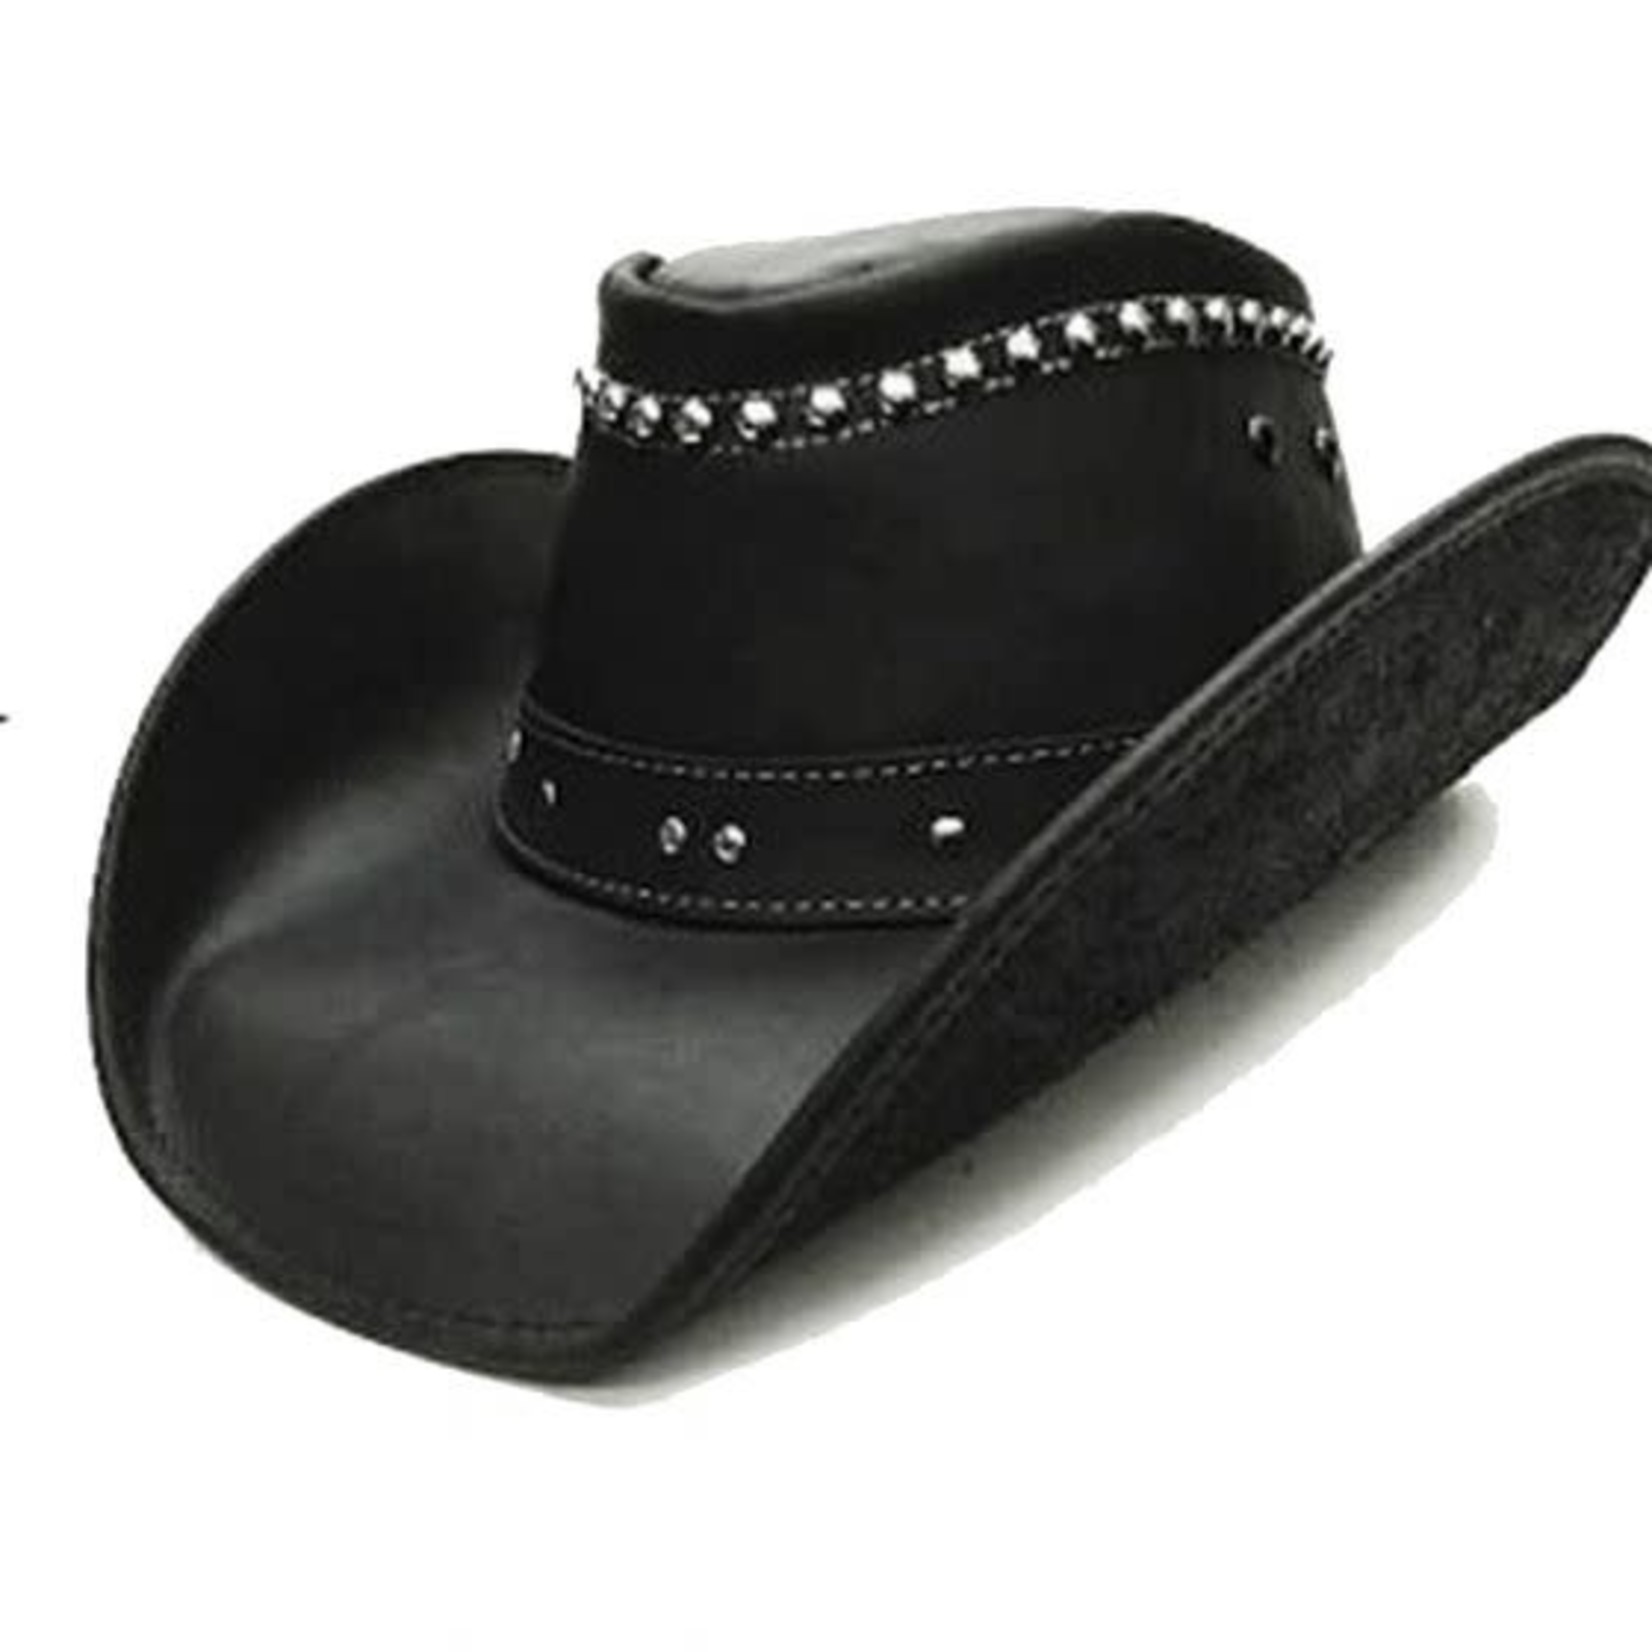 Modestone Unisex Black Leather Hat with Metal Studs